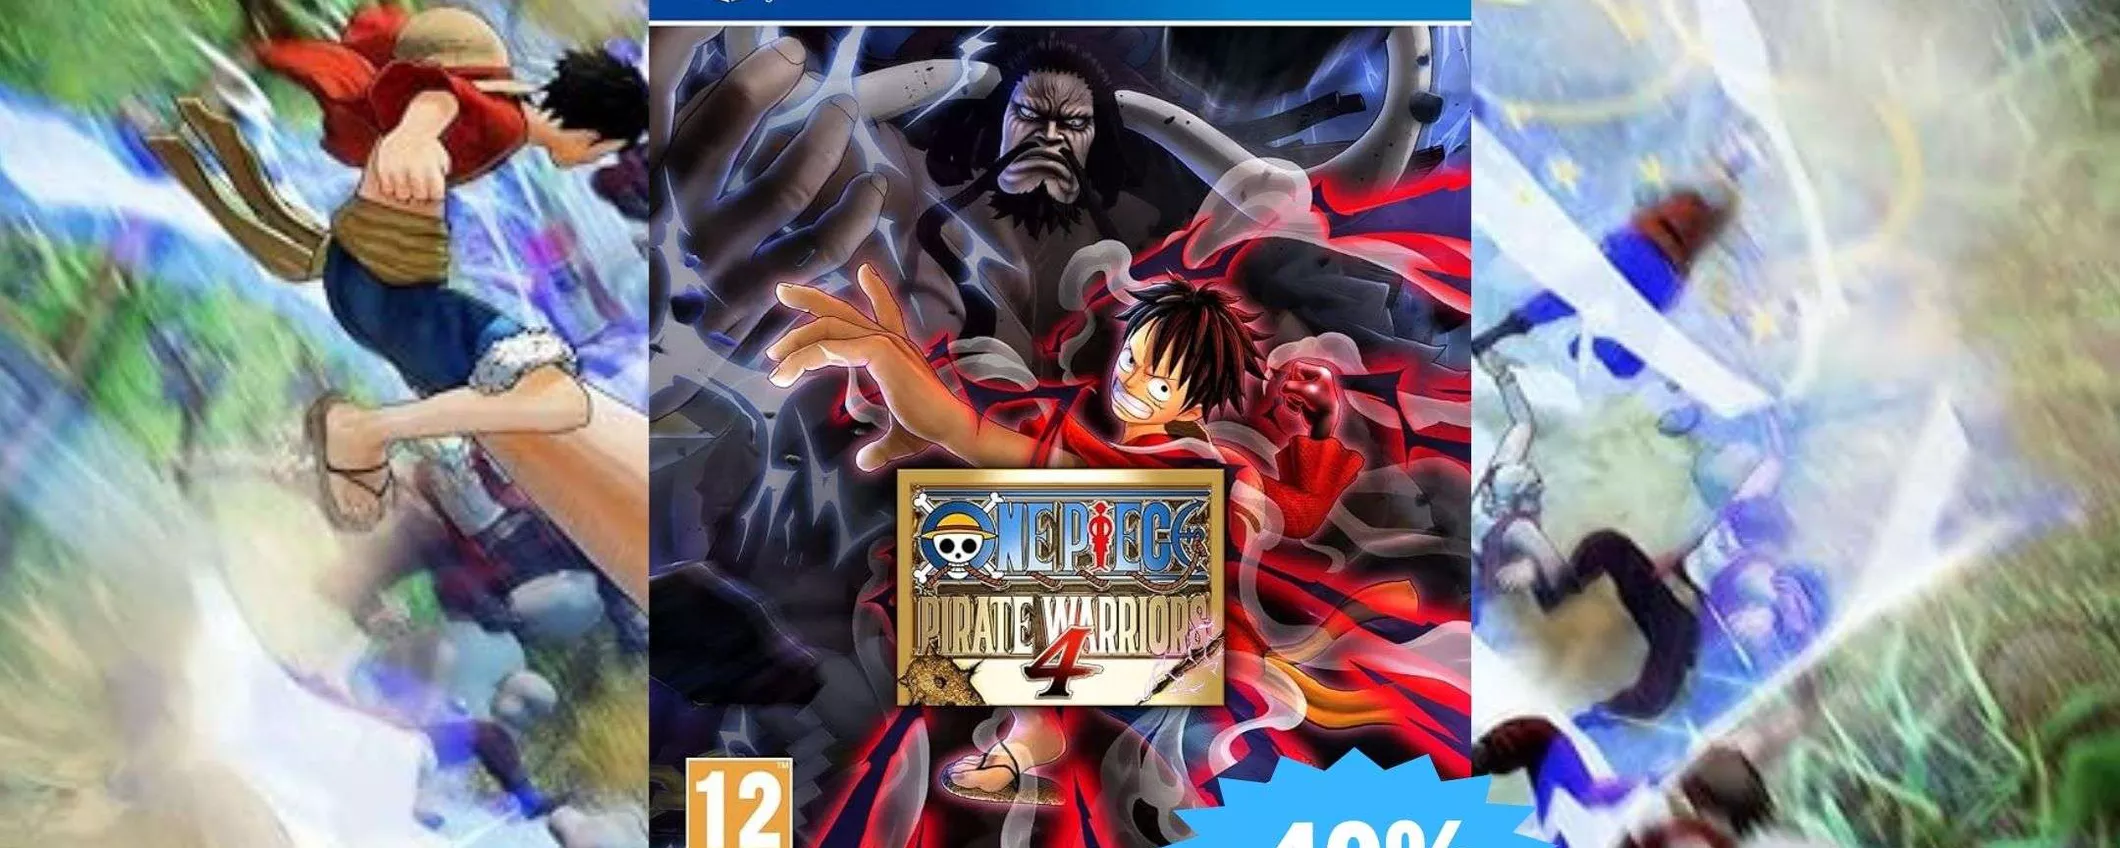 One Piece - Pirate Warriors 4 per PS4: MEGA sconto del 40%